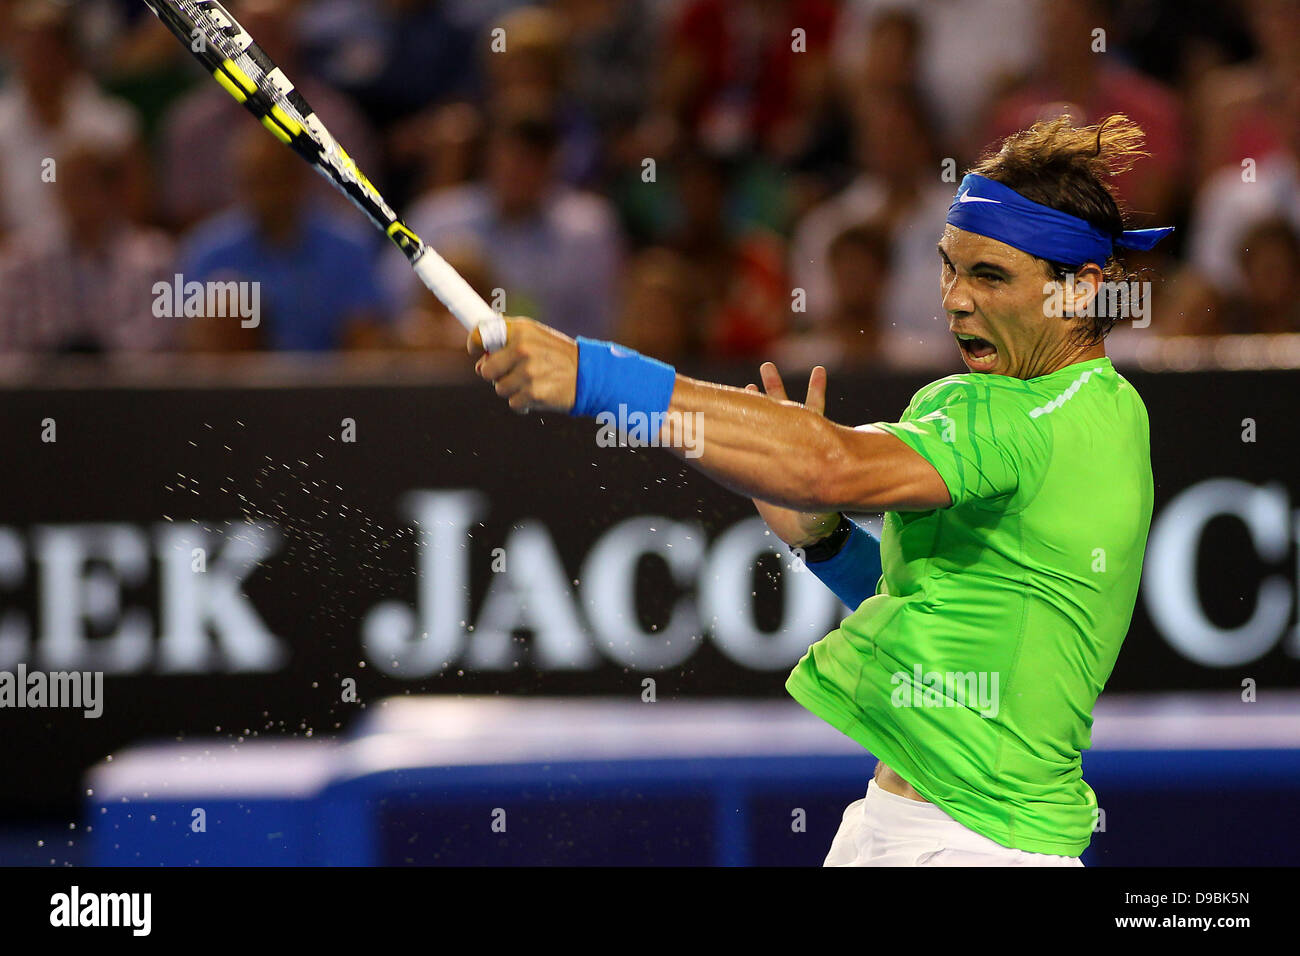 Rafael Nadal Australian Open 2012 - Men's Final - Novak Djokovic vs. Rafael  Nadal. Novak Djokovic defeated Rafael Nadal in a five-set, five-hour final  Melbourne, Australia - 29.01.12 *** Stock Photo - Alamy